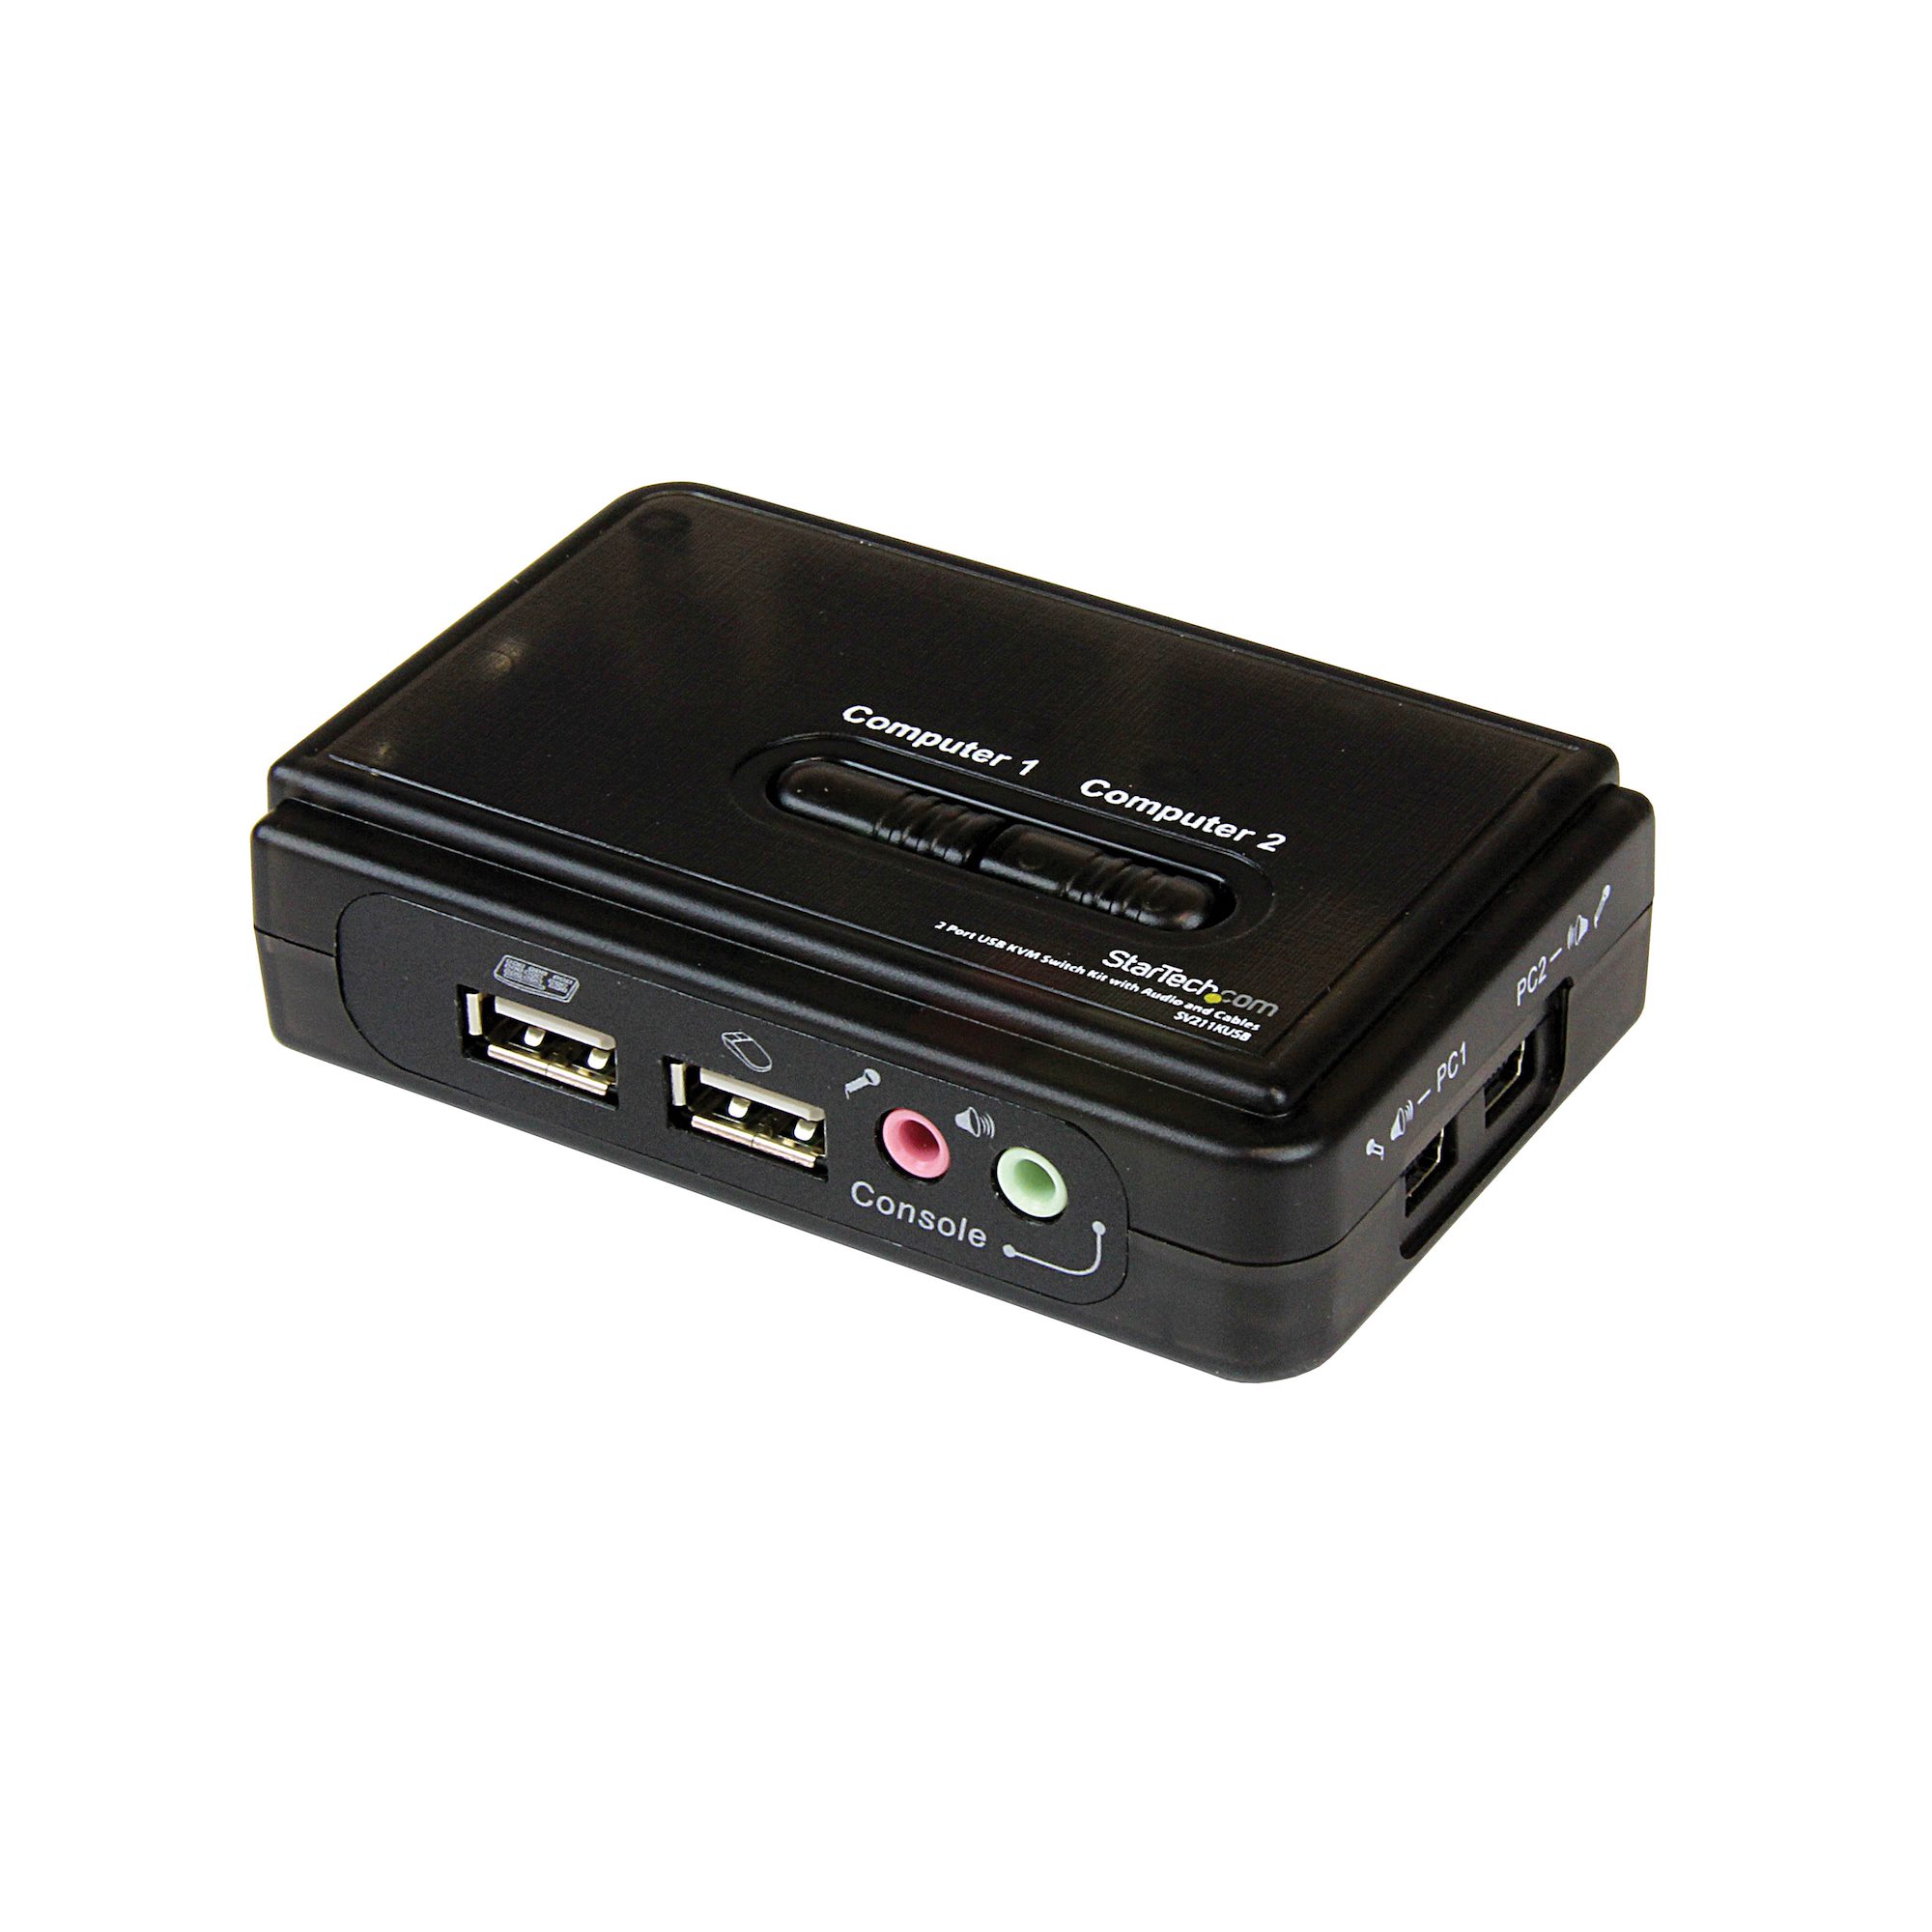 USB Cable KVM Switch 2 Port + Audio